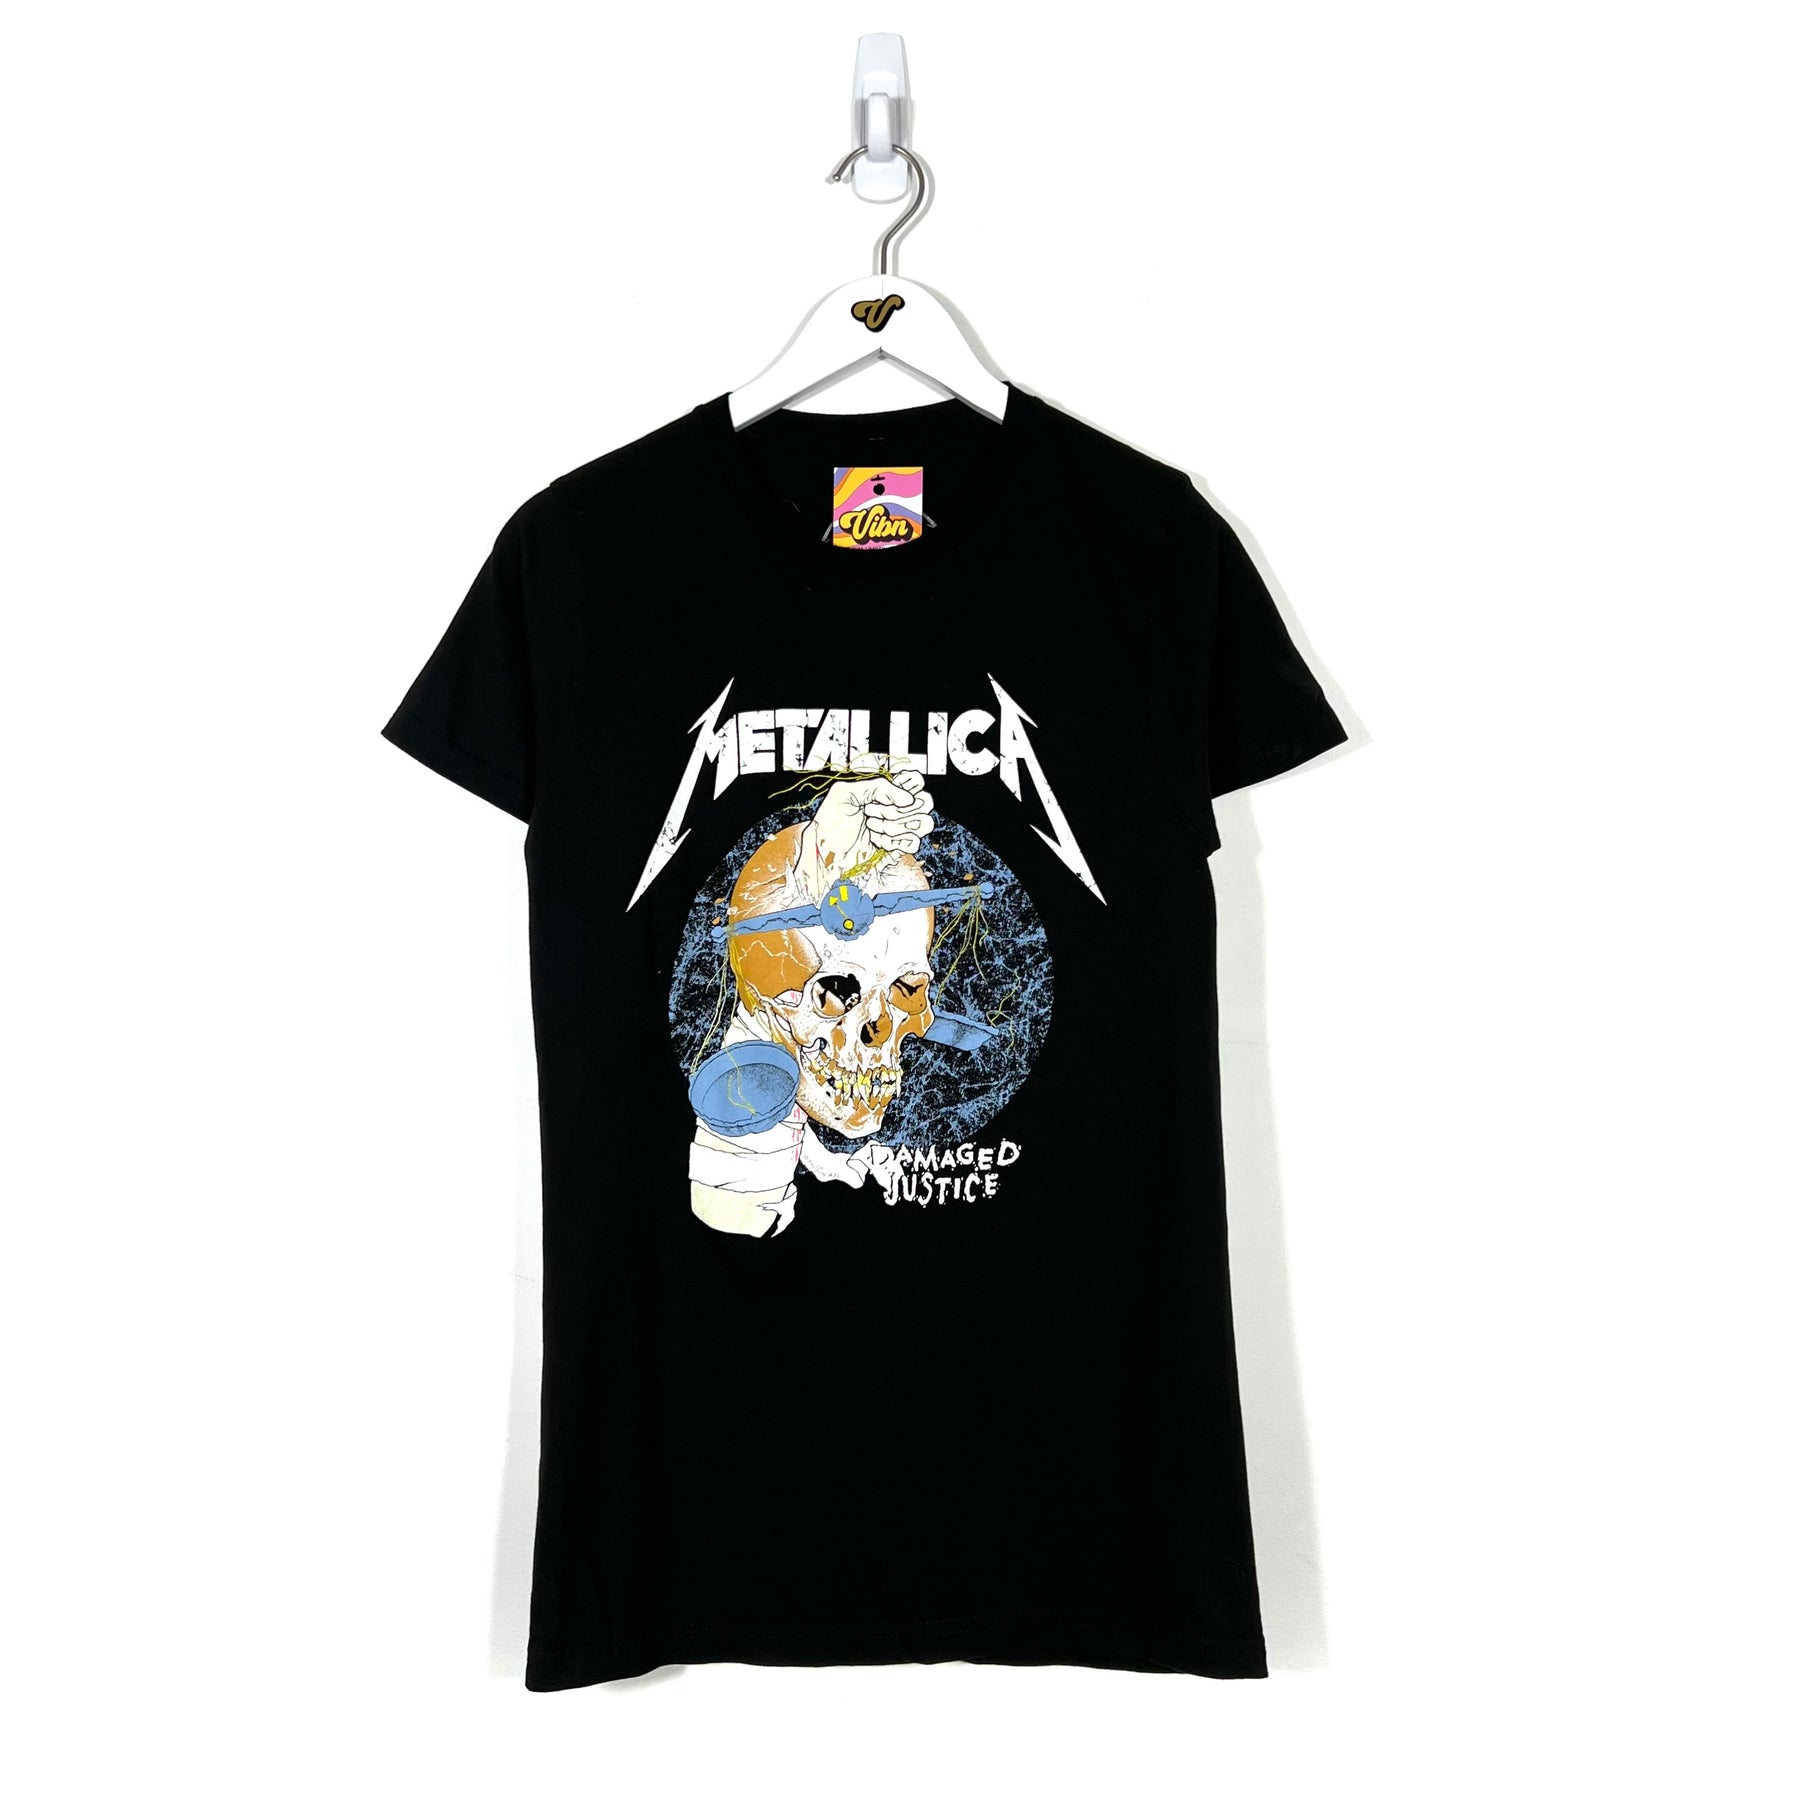 Metallica Damaged Justice T-Shirt - Men's Small